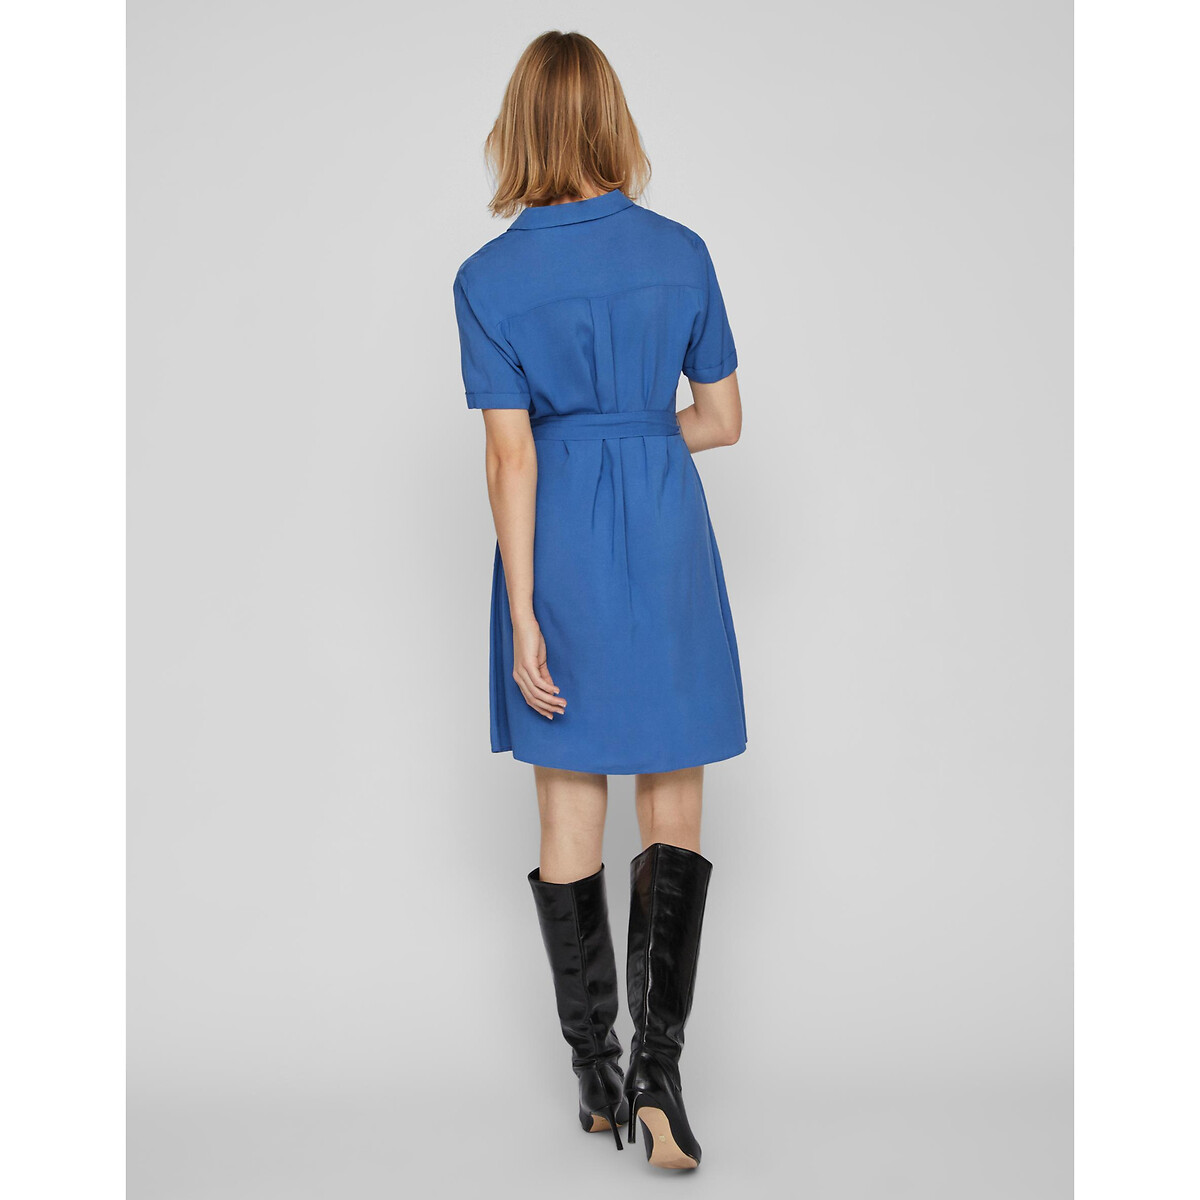 Платье-рубашка Короткие рукава с завязками 46 синий LaRedoute, размер 46 - фото 4